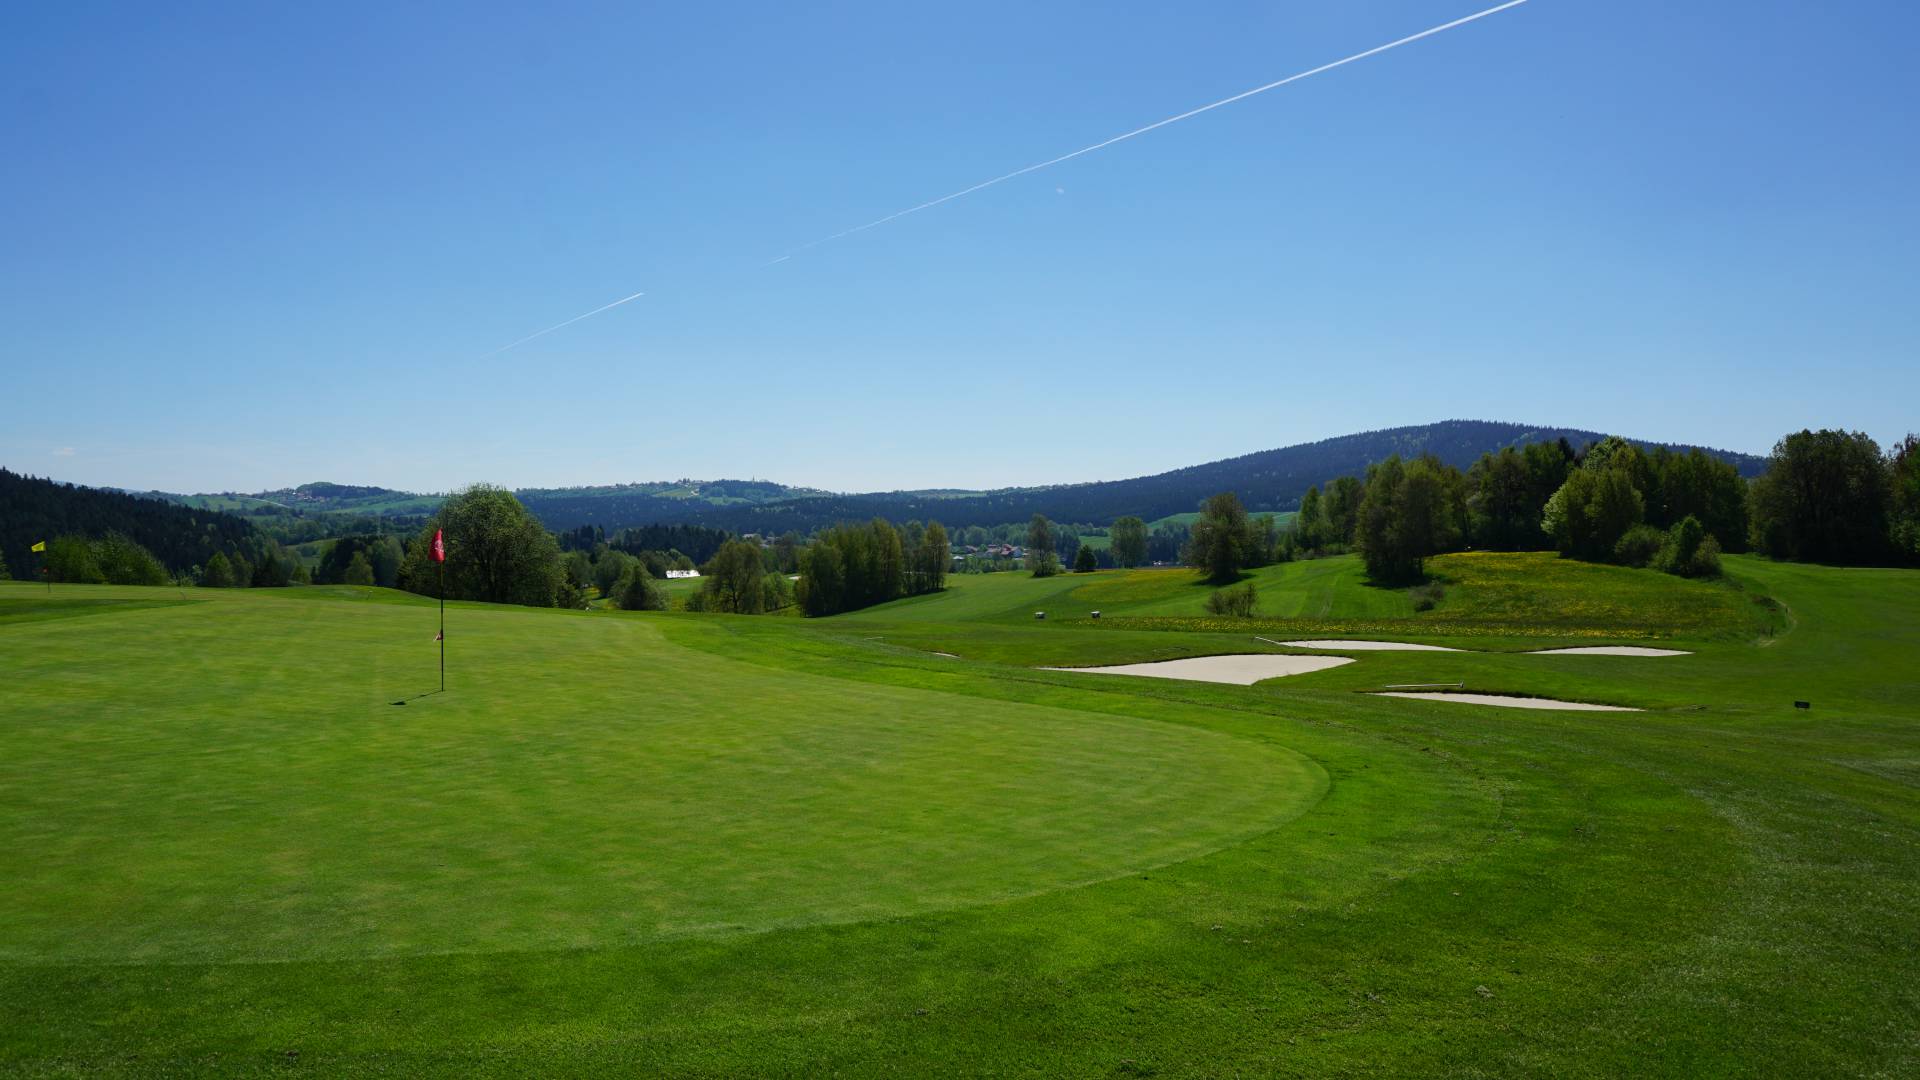 Golfplatz am Nationalpark Bayerischer Wald